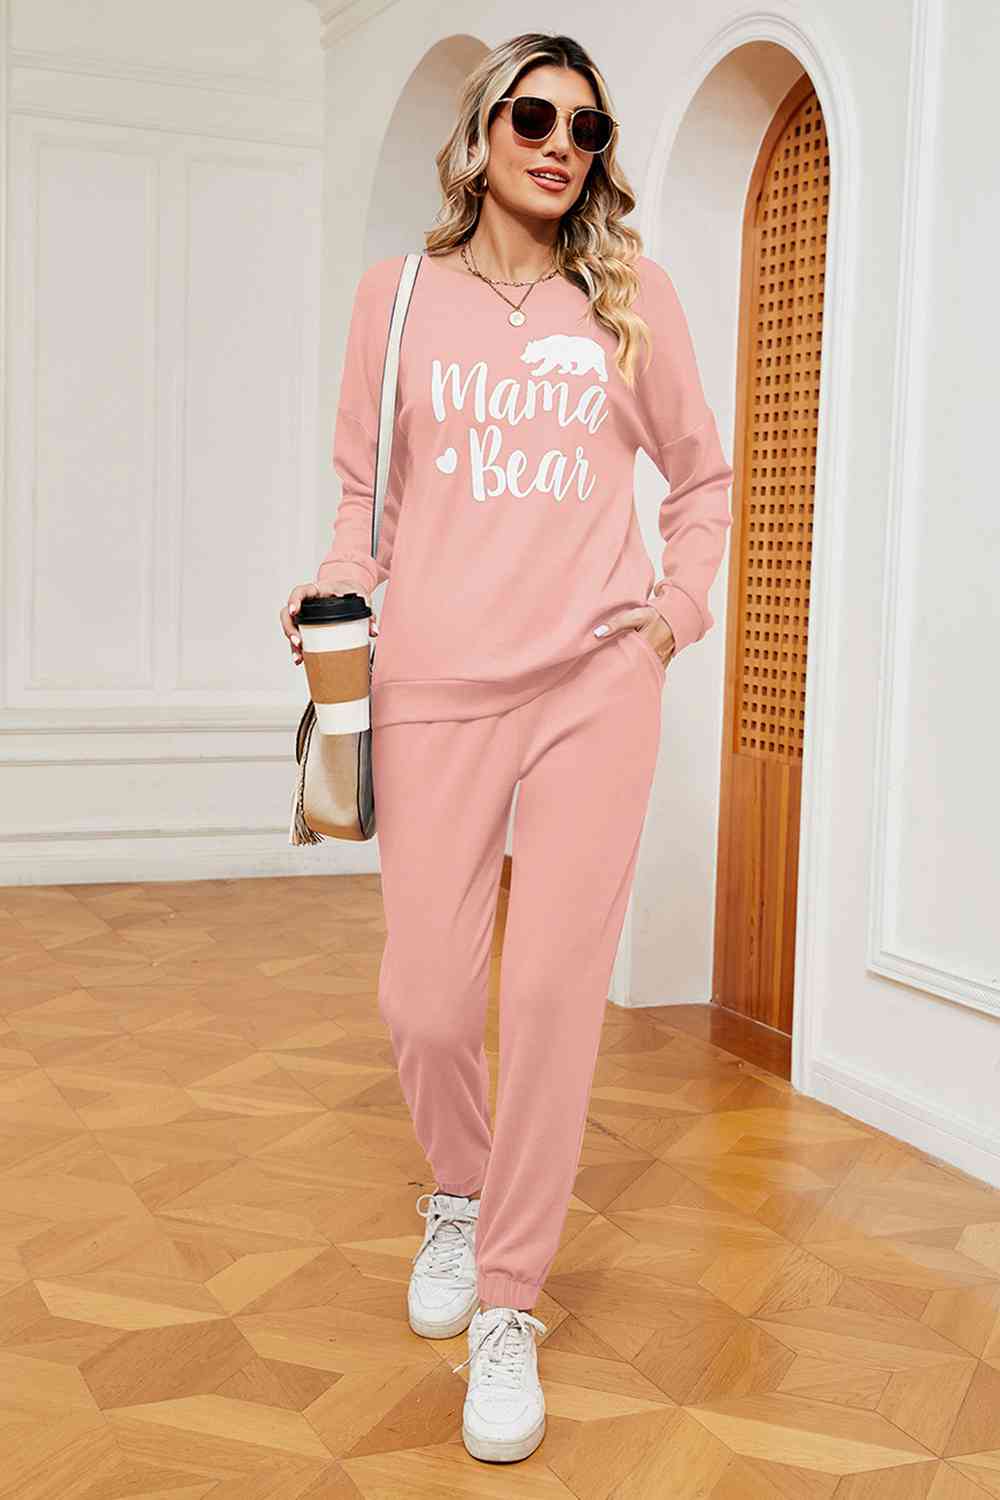 MAMA BEAR Graphic Sweatshirt and Sweatpants Set (5 Colors) Loungewear Krazy Heart Designs Boutique Blush Pink S 